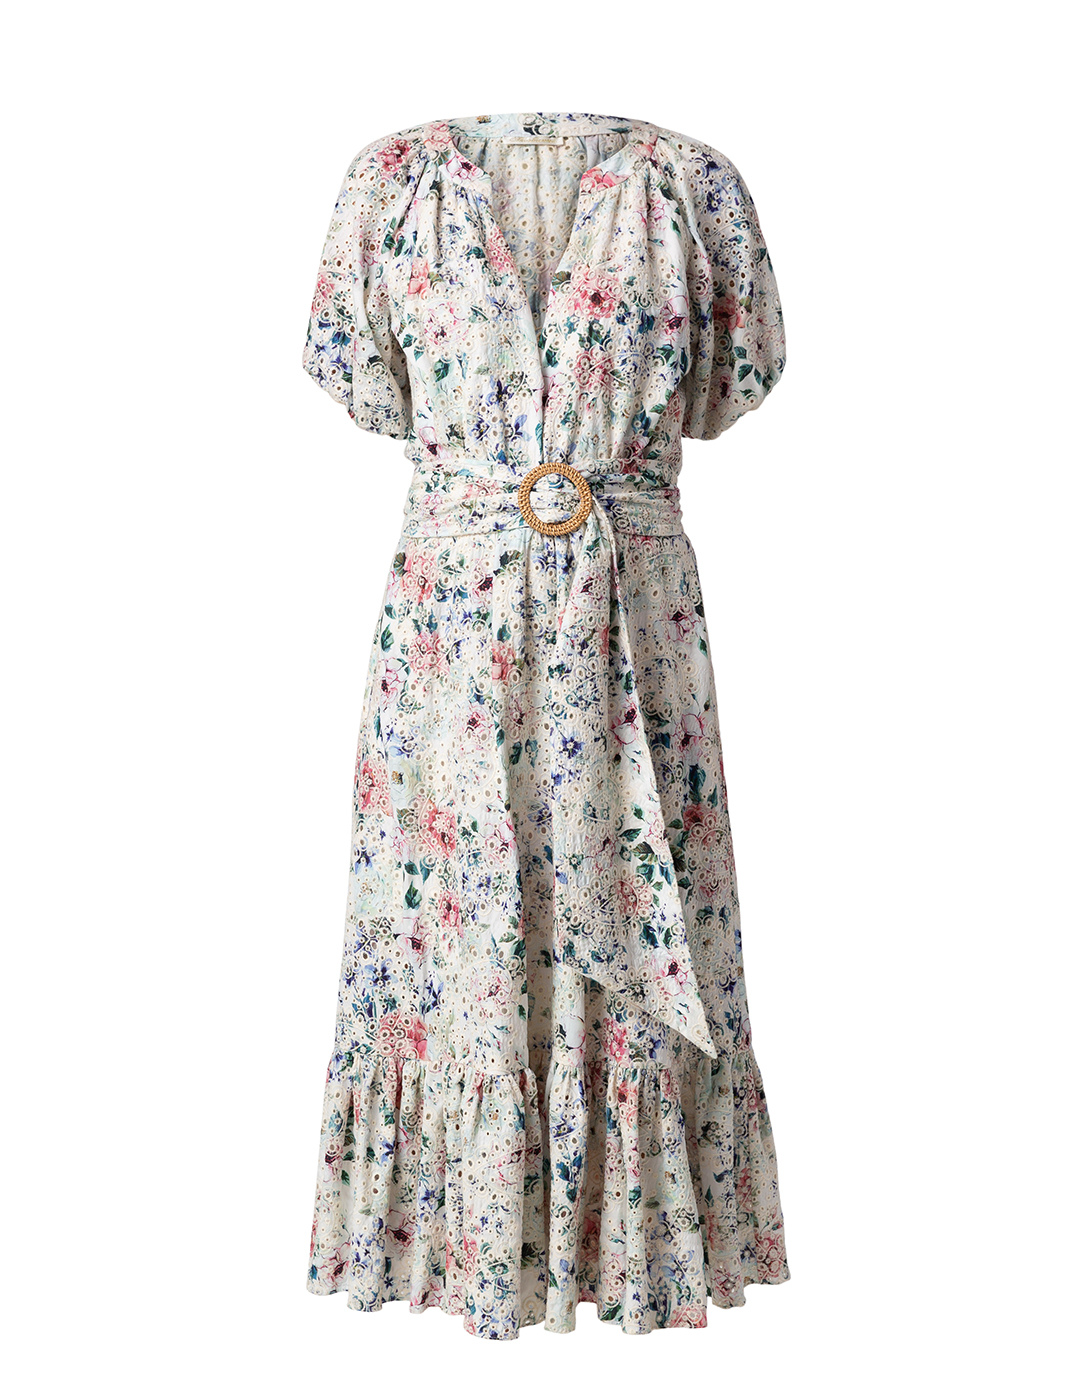 Shoshanna Womens Mireya Floral Print Ruffled Hi-Low Midi Dress BHFO 0942